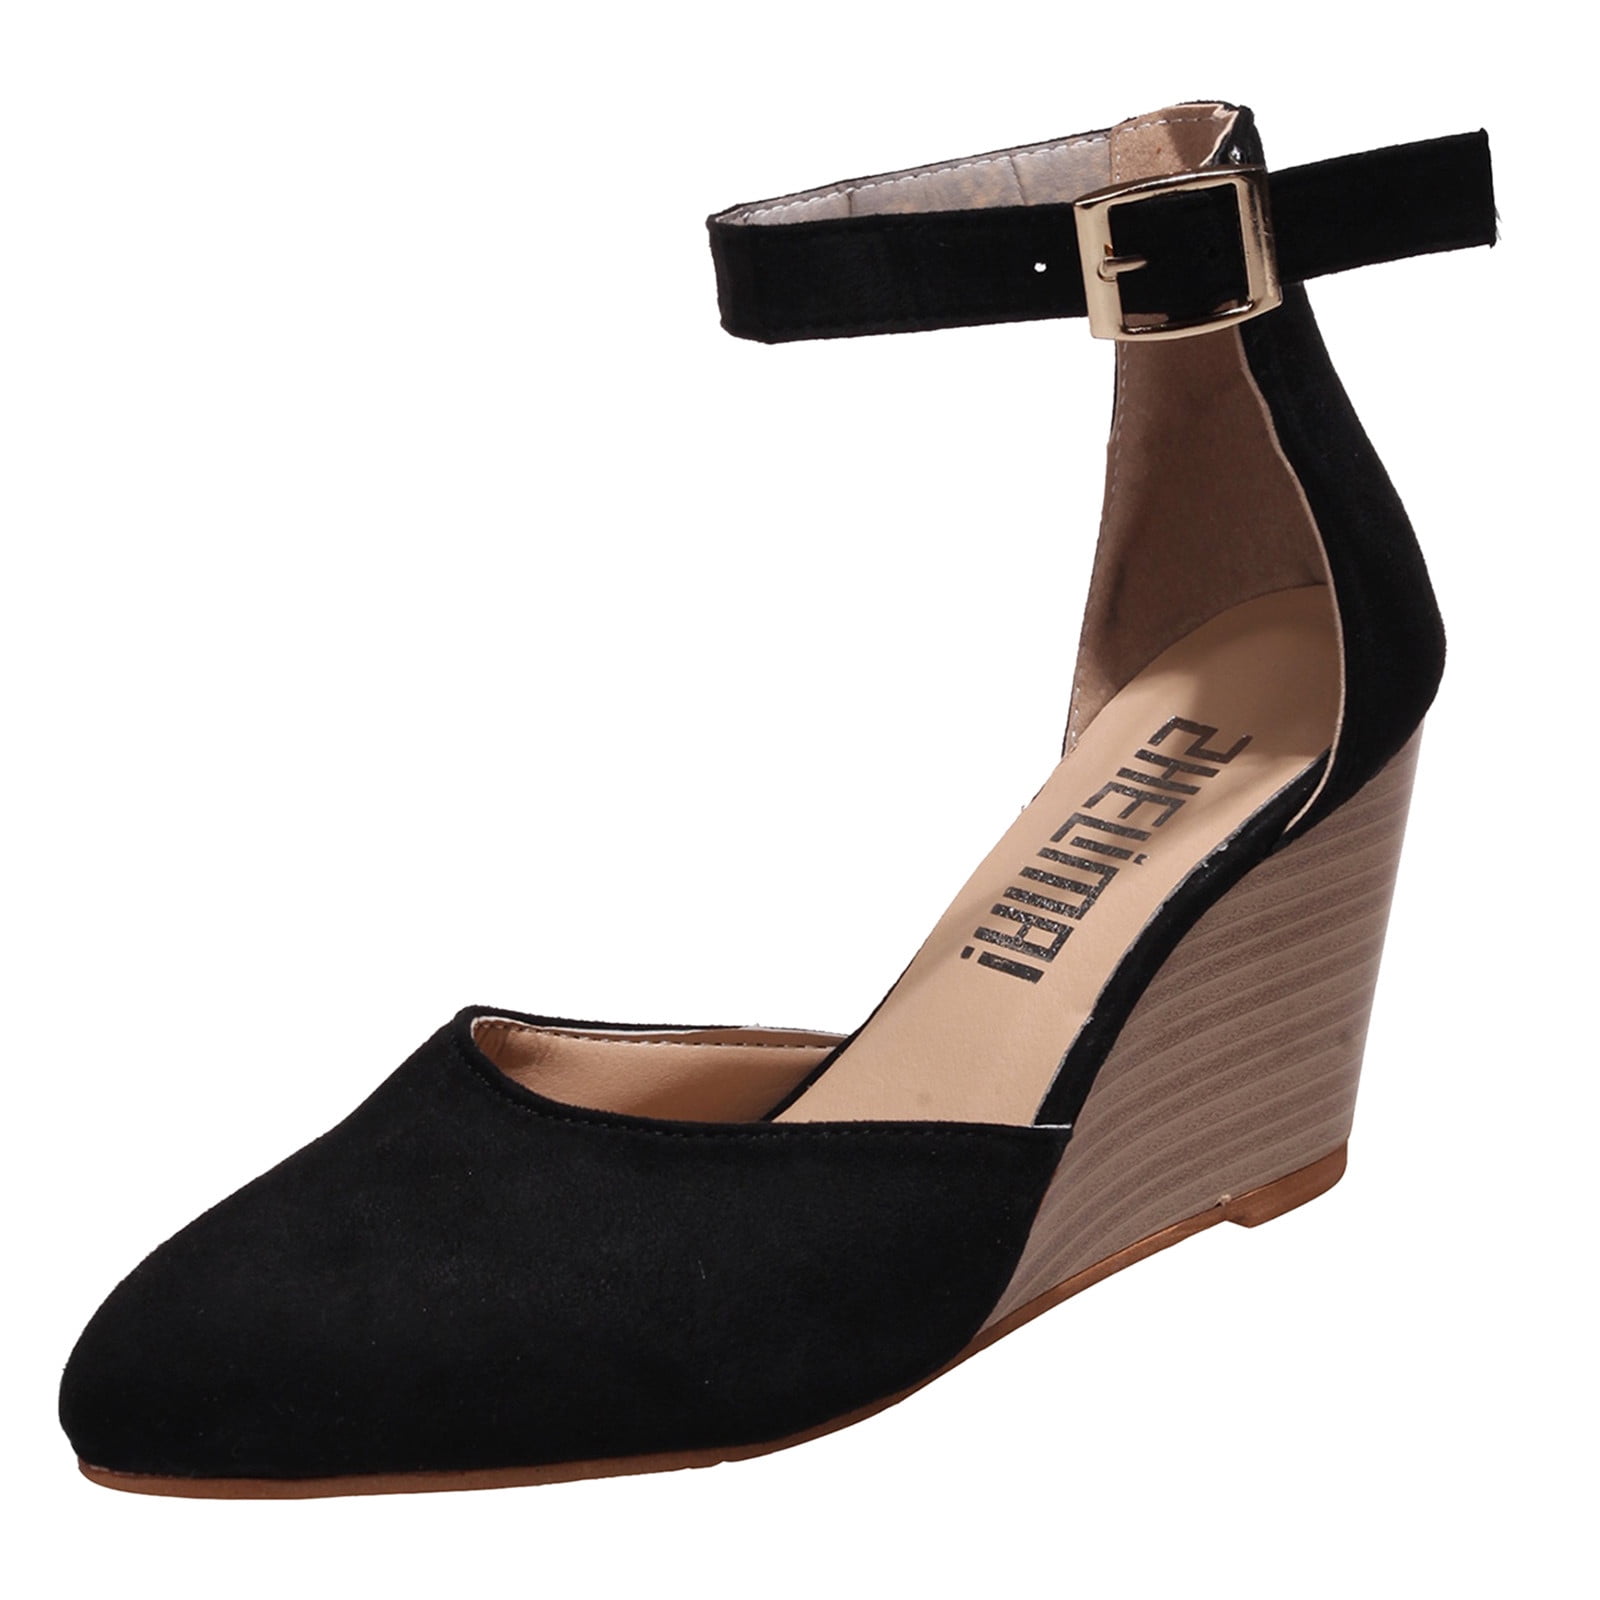 Buy MONROW Lyla Leather Wedge Heels for Women, Black, UK-4 | Fancy &  Stylish Heel sandals, Casual, Comfortable Fashion Heel Sandal at Amazon.in